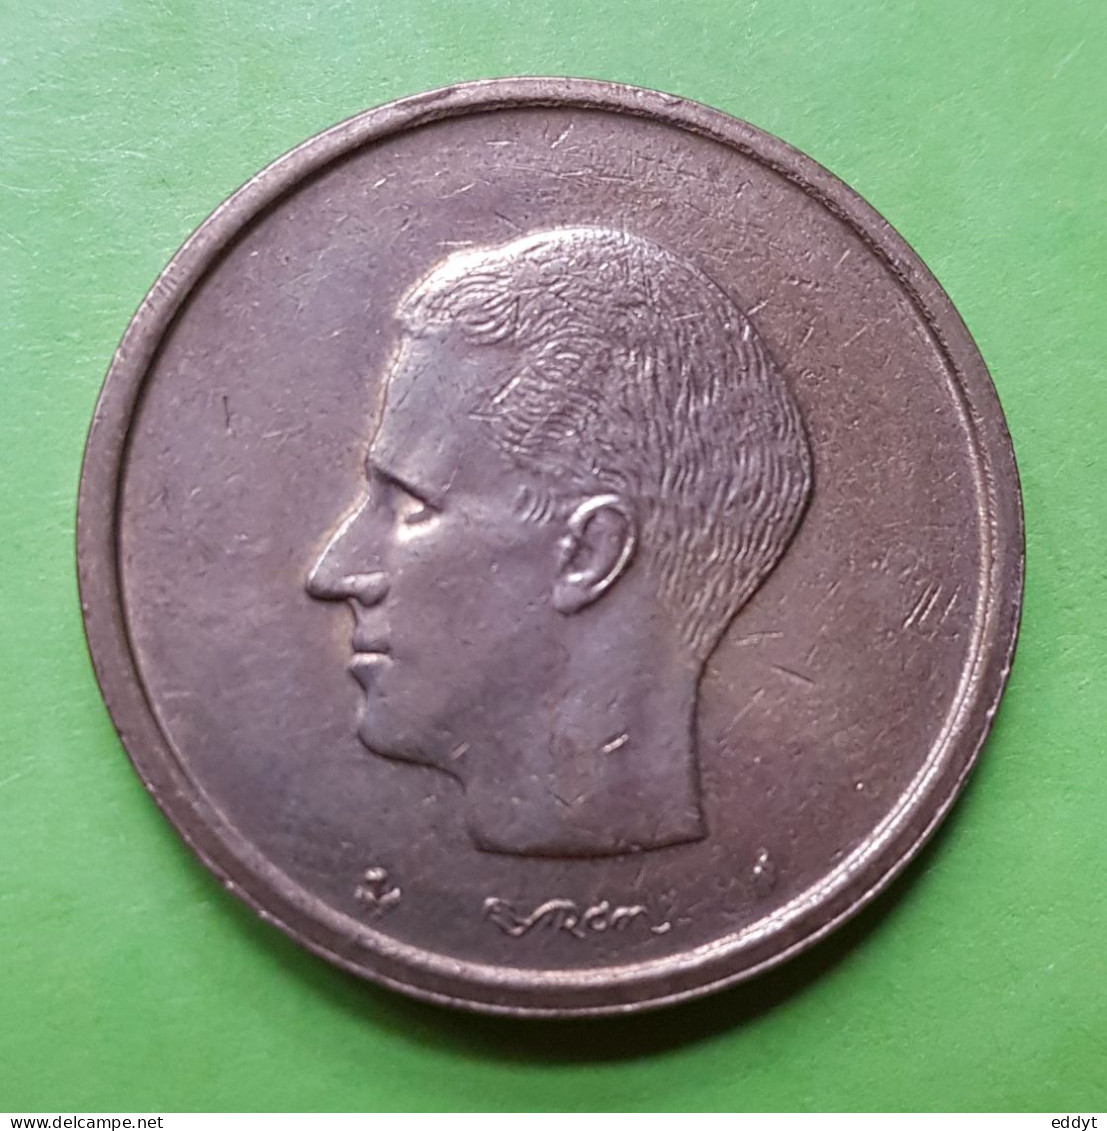 Monnaie, Pièce BELGE - 20 Francs 1980 - - 20 Frank